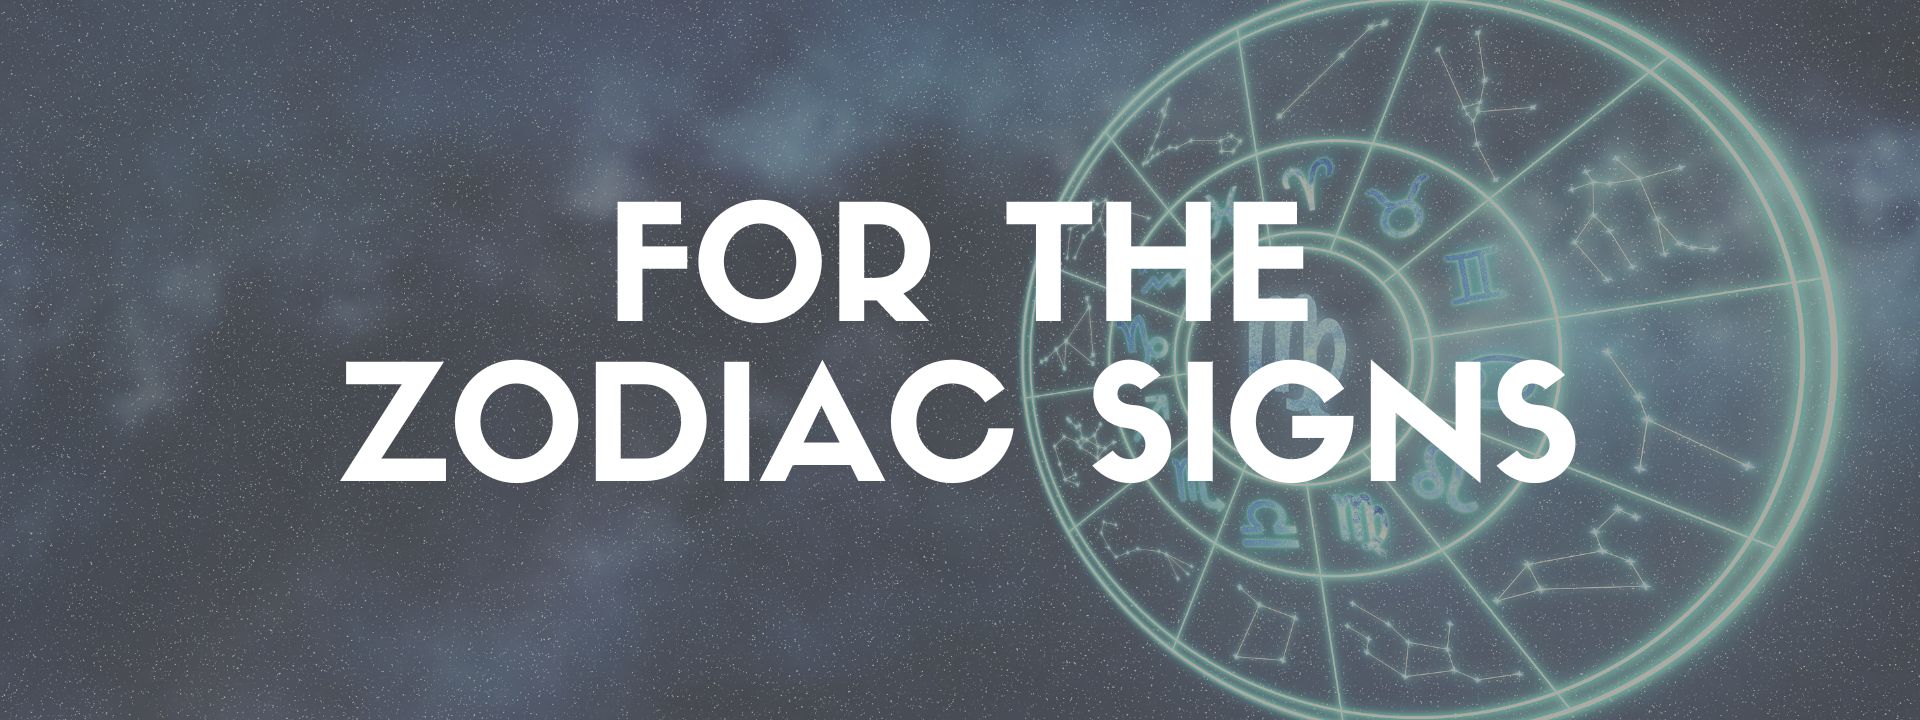 Juno in Cancer: June - August 2023 - The Dark Pixie Astrology